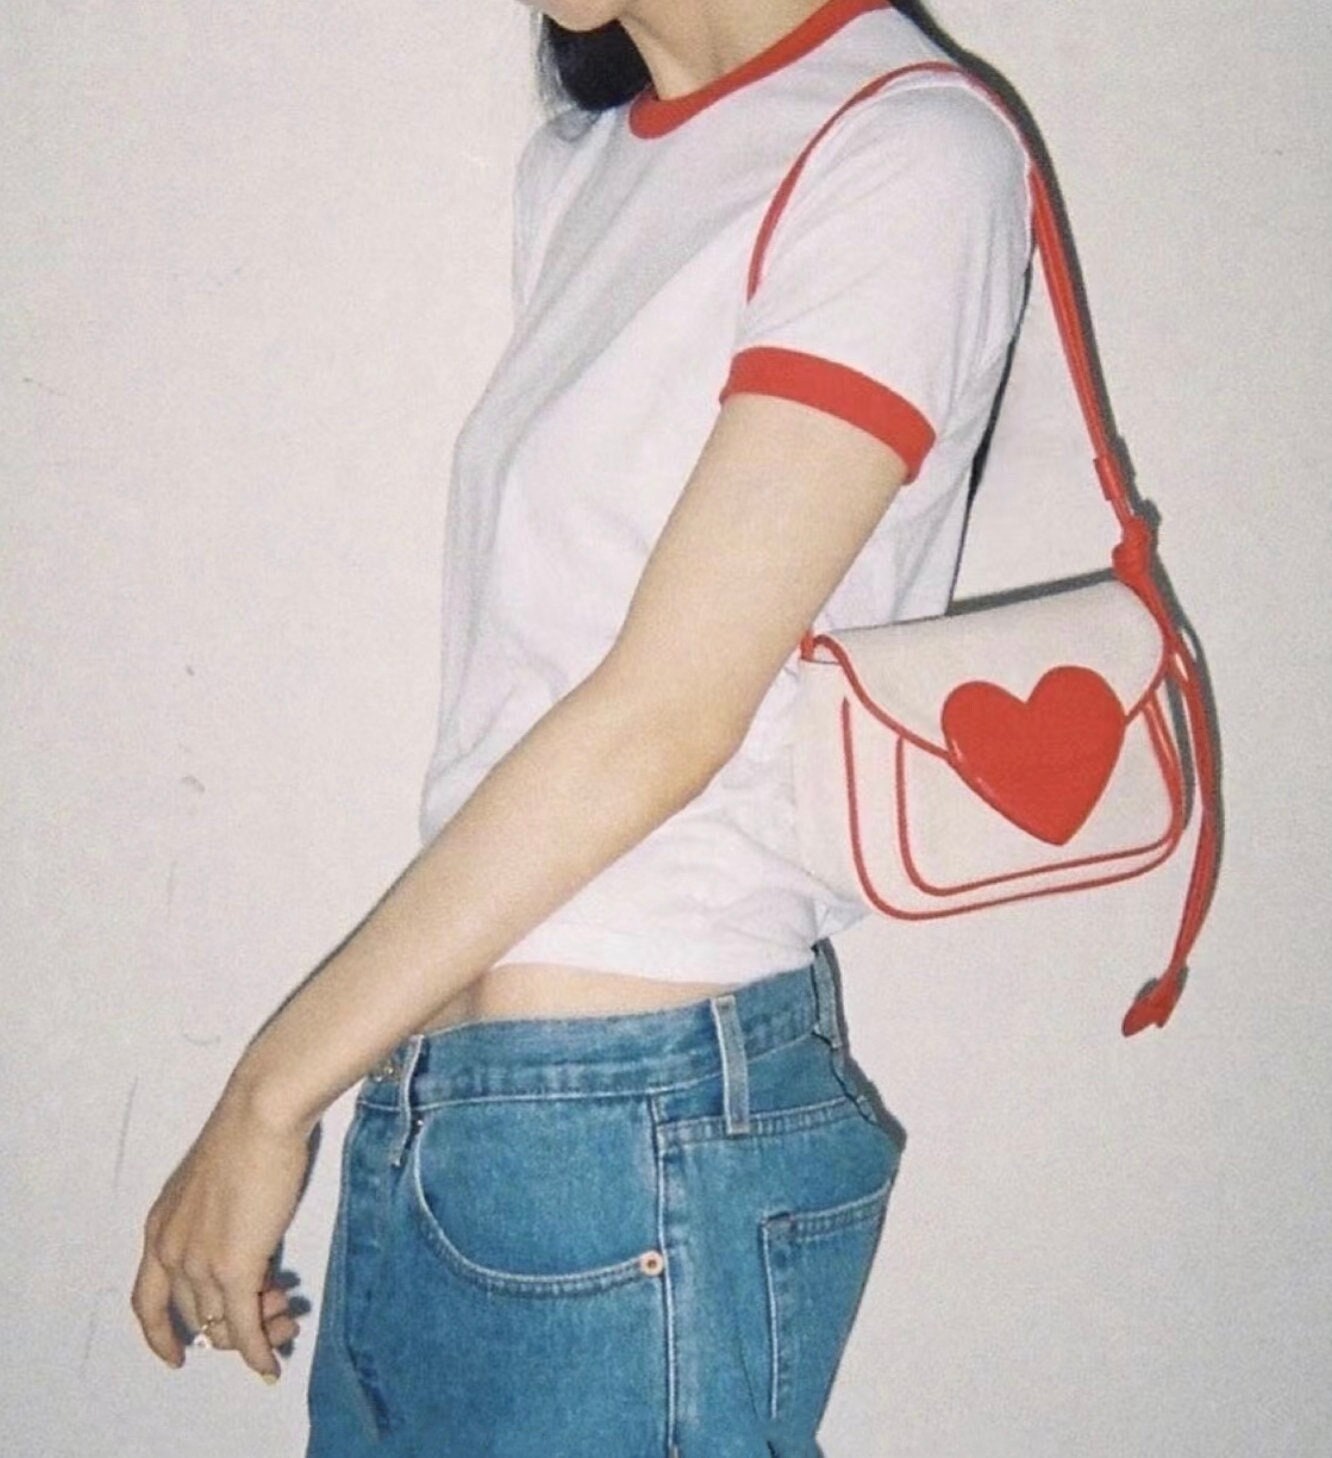 Pin by Sloane Jordyn on Bags  Heart shaped bag, Bags, Heart bag